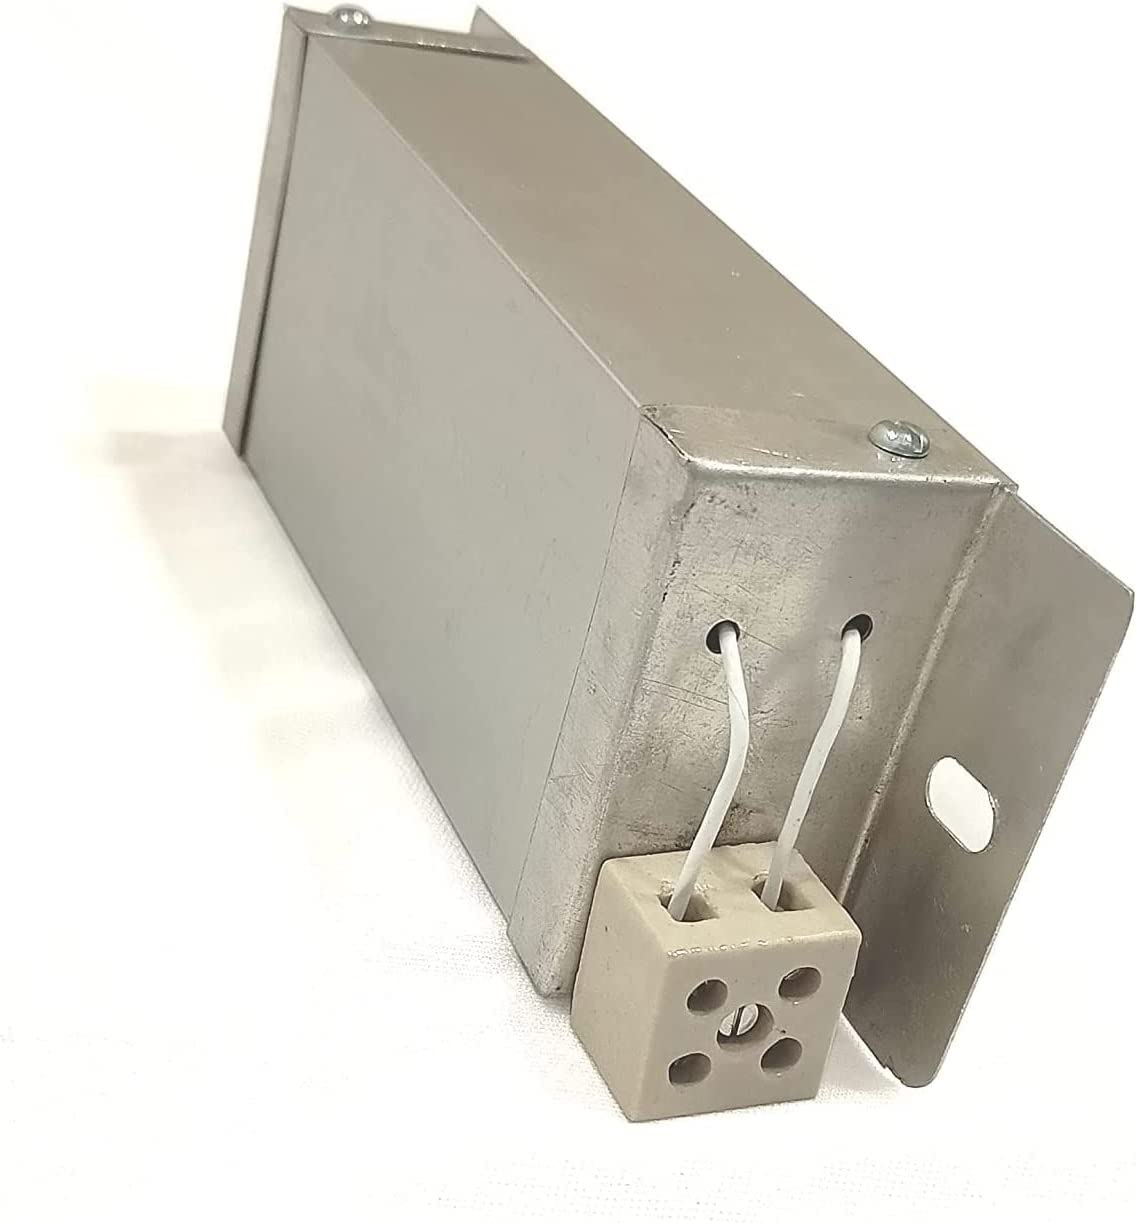 Box Type Space Heater